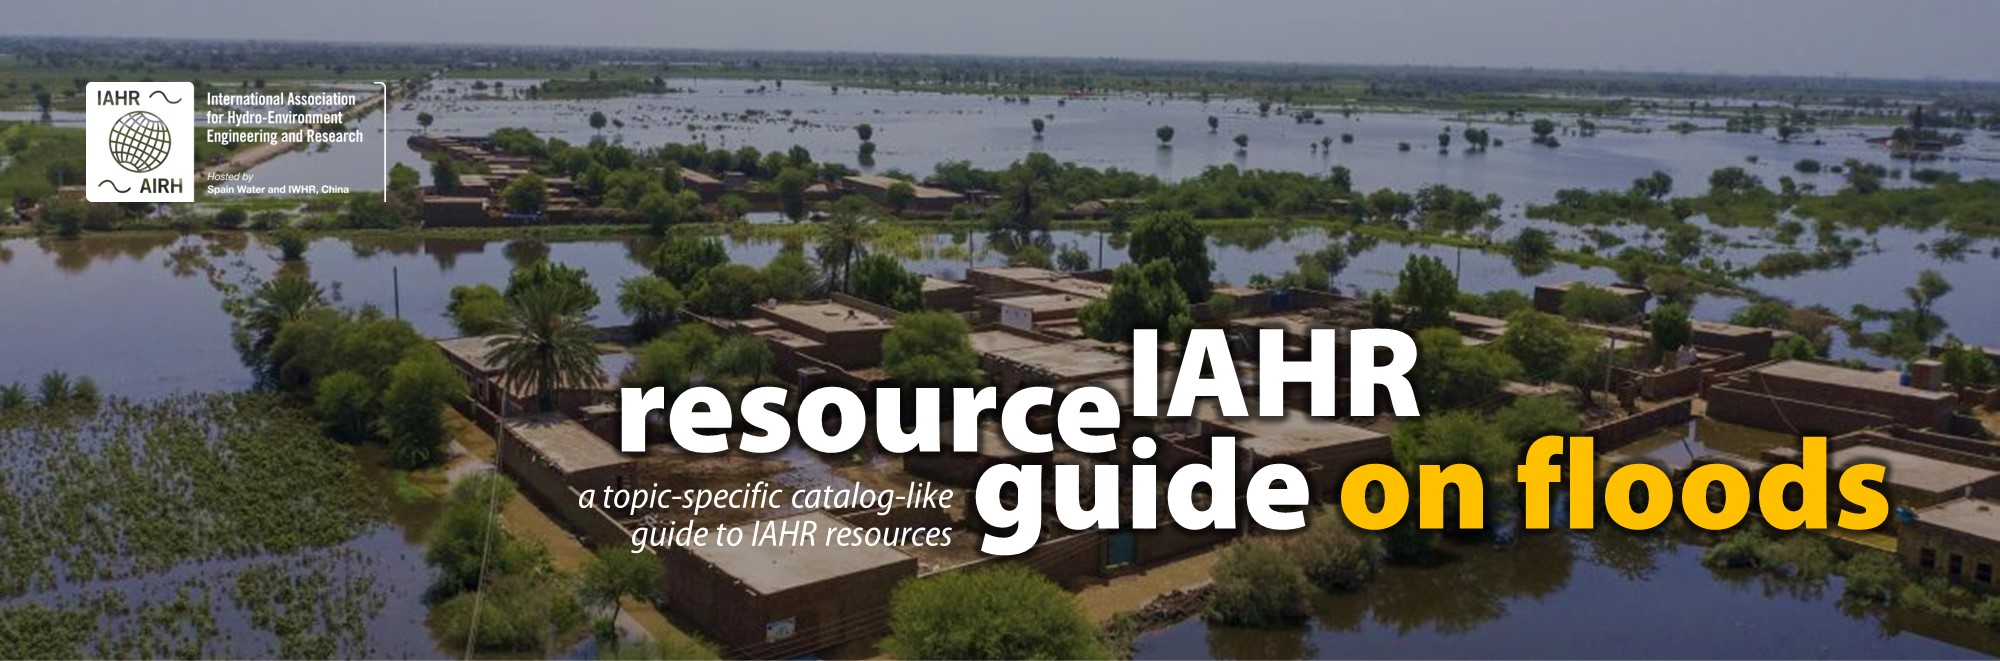 20221021 IAHR Resource Guide on Floods.jpg